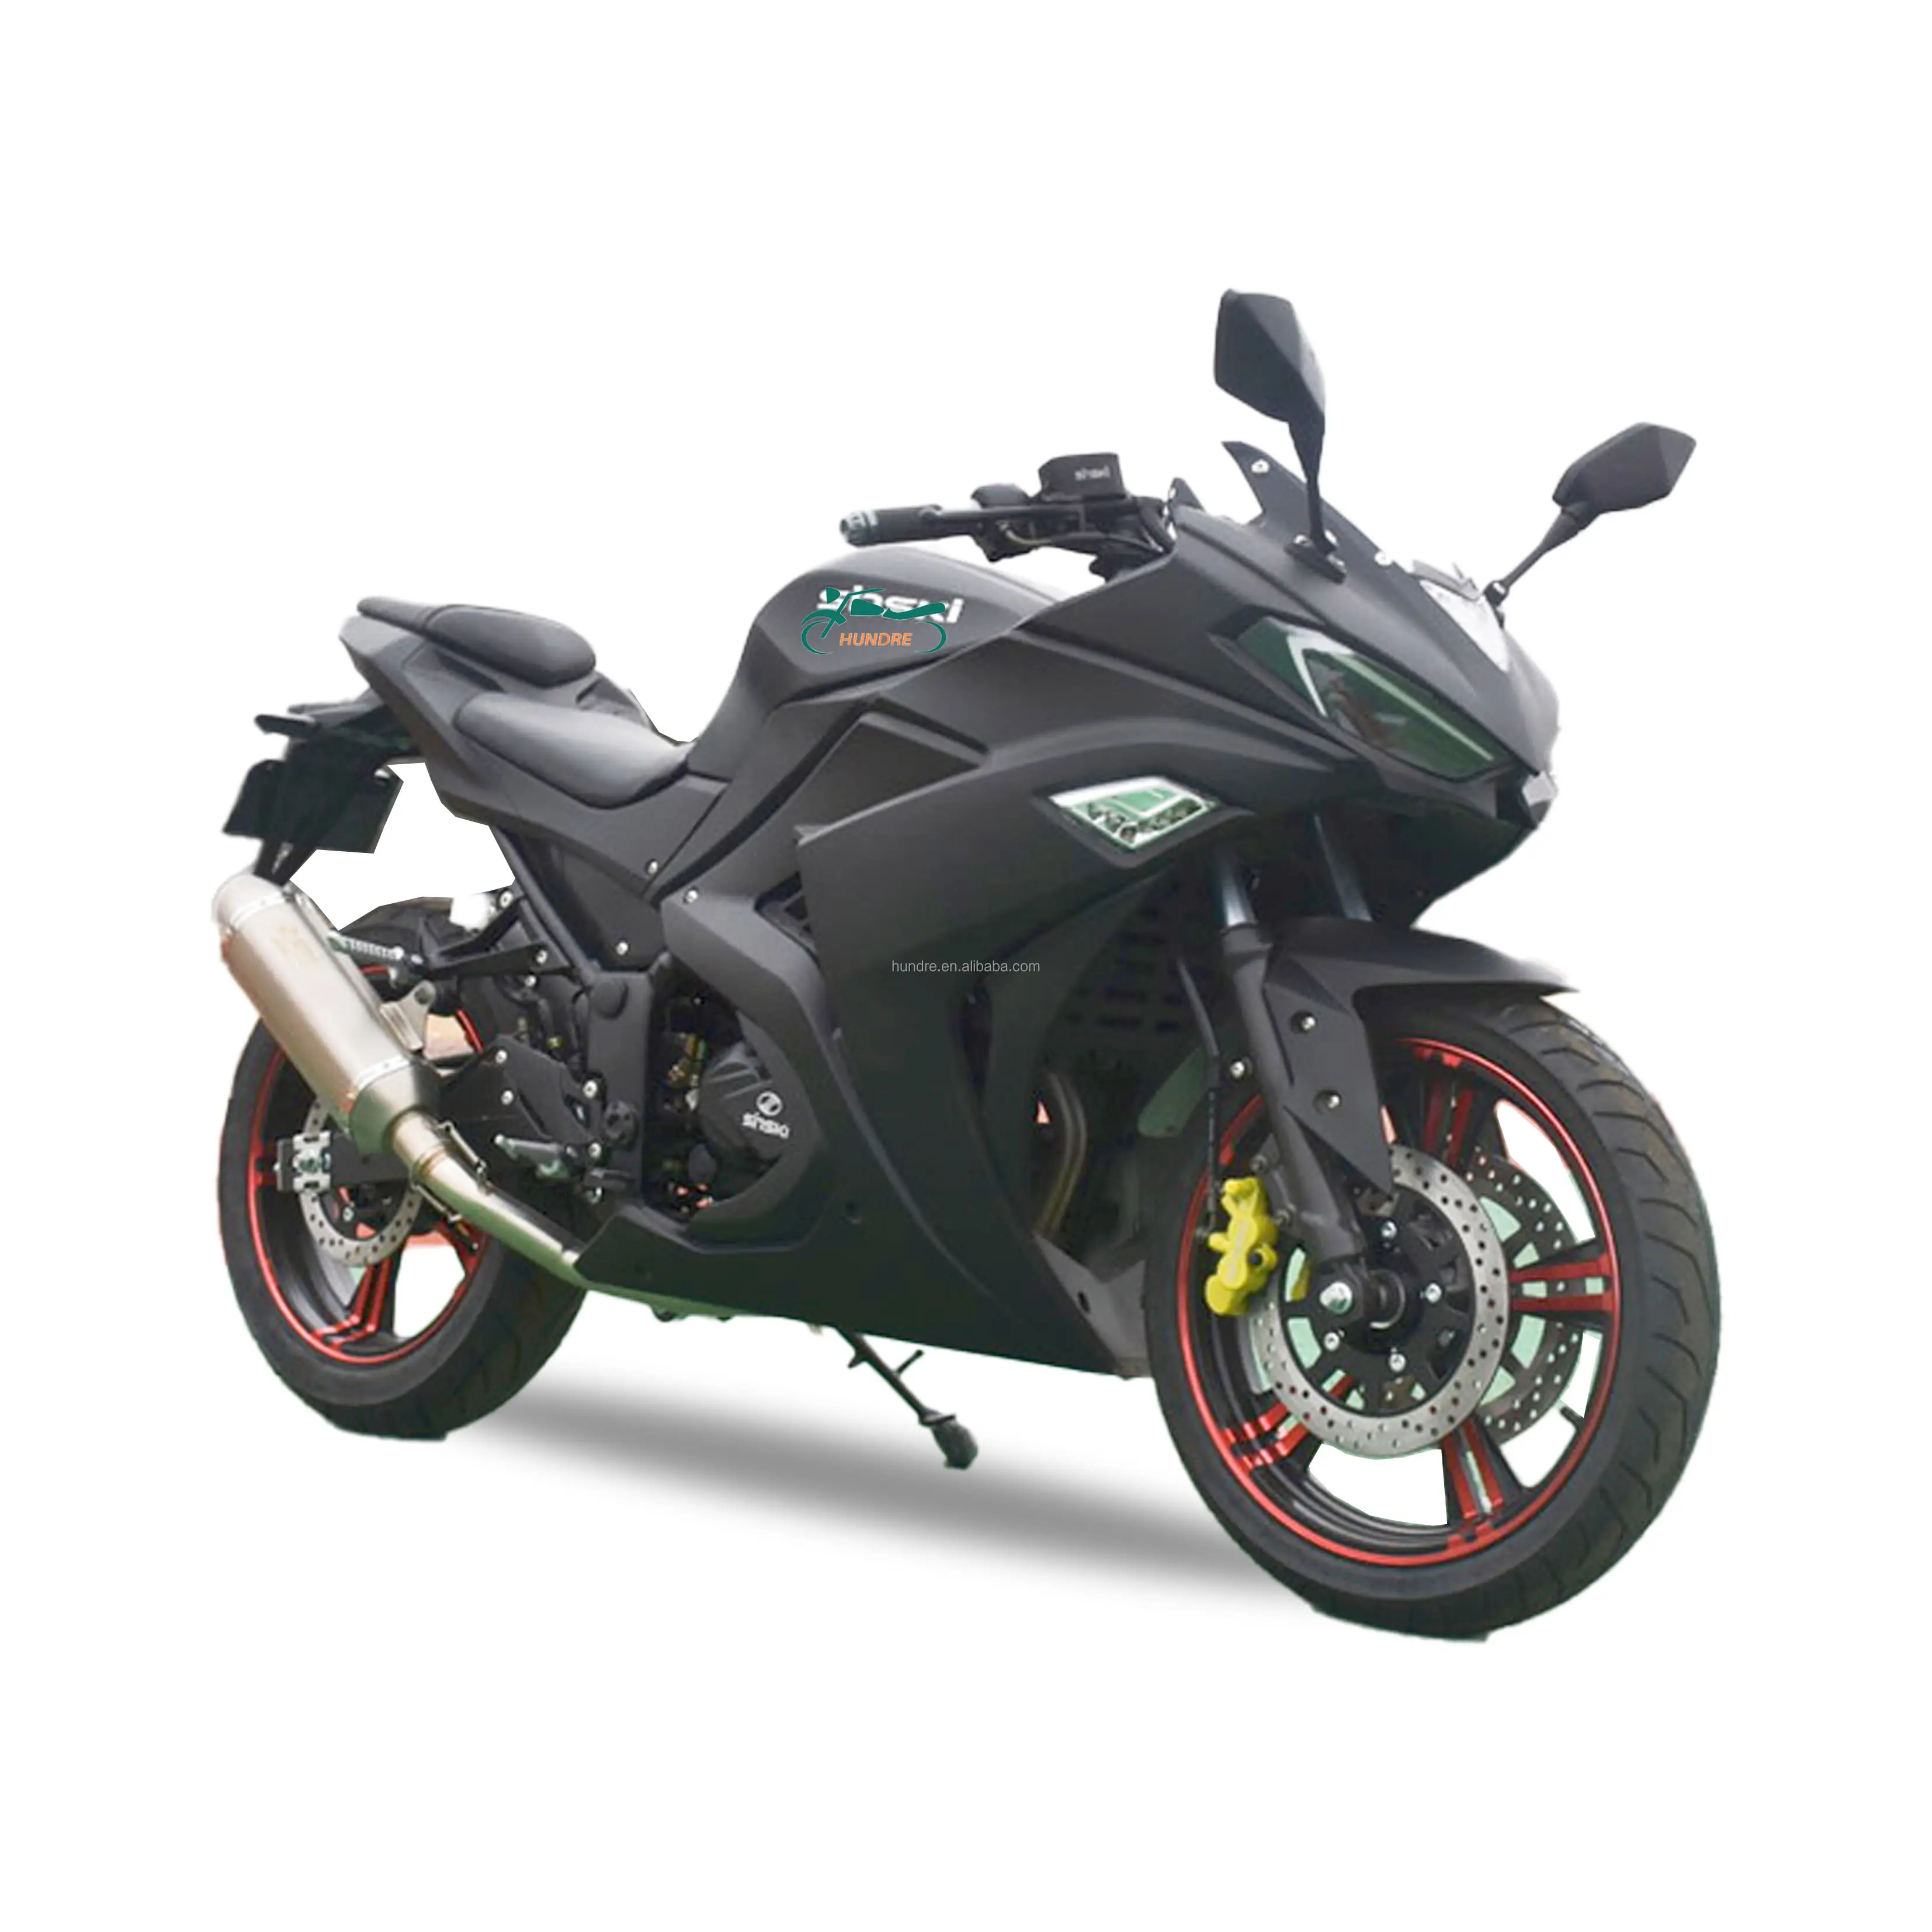 300cc 400cc במהירות גבוהה ביצועים מותאמים אישית אופנועים מירוץ אופנועים בנזין אופנוע בנזין